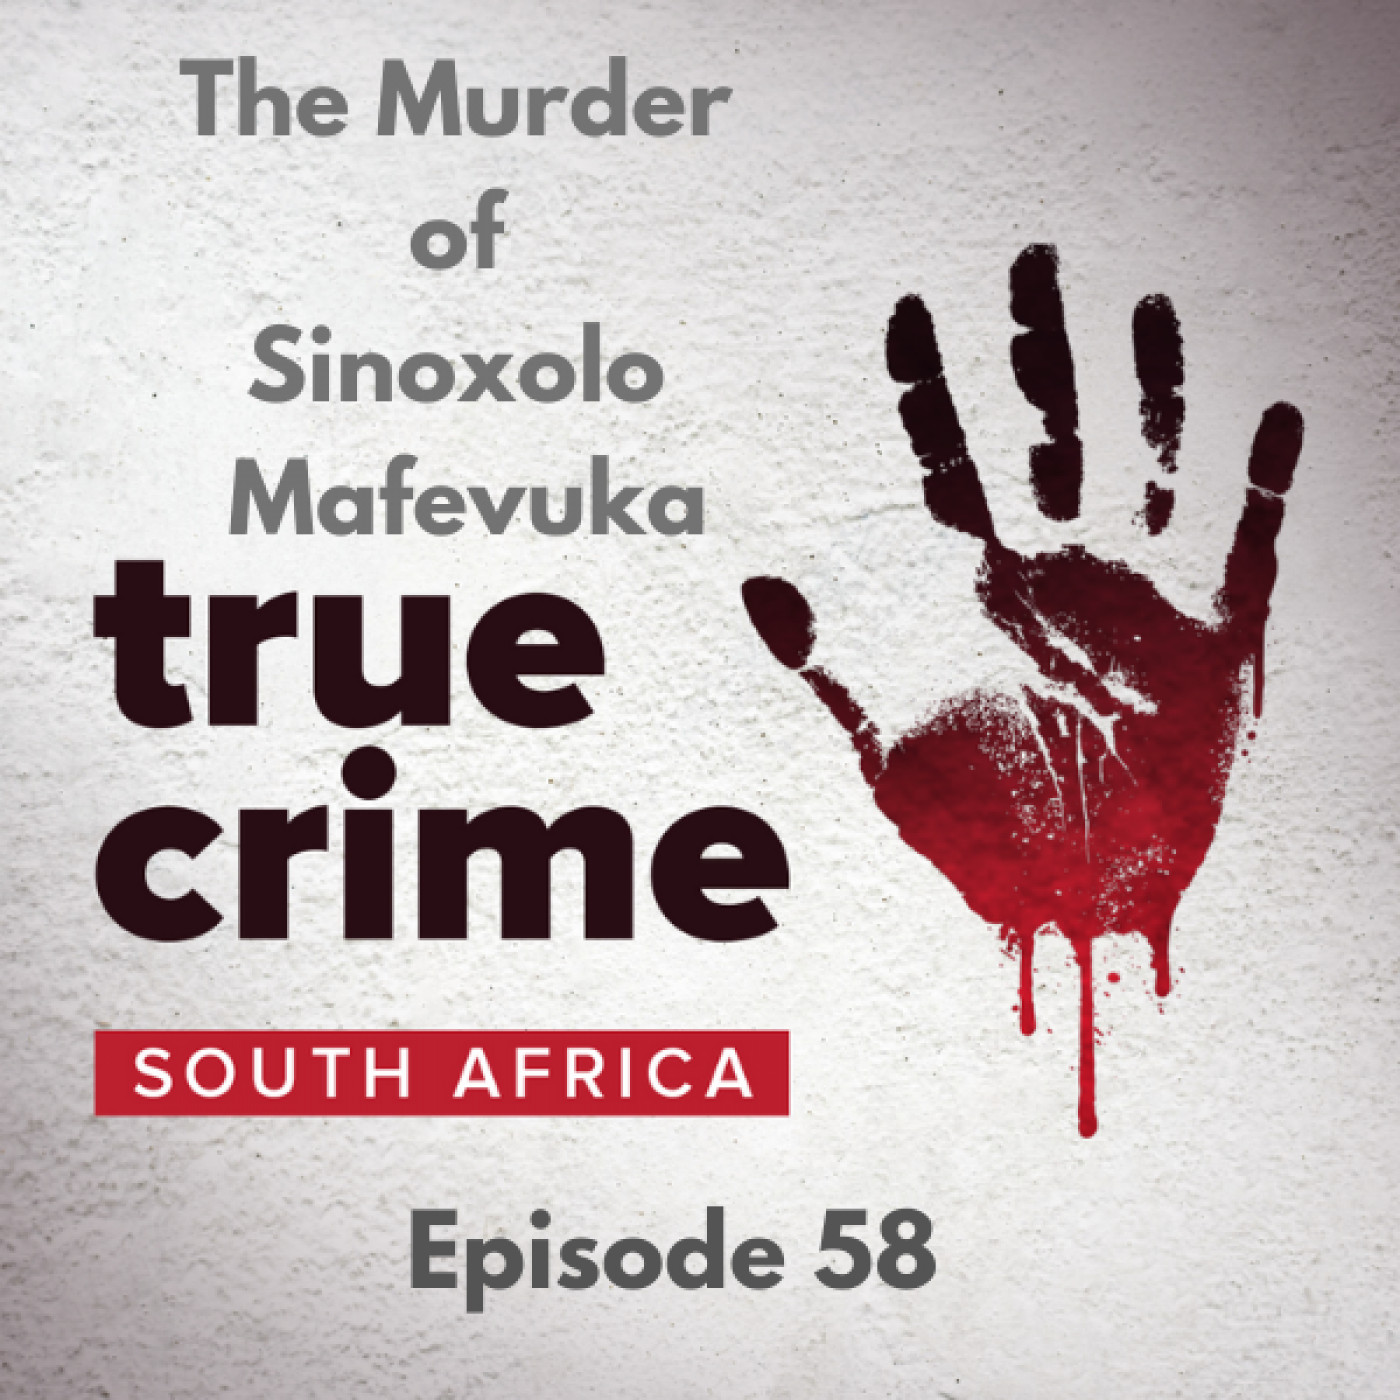 Episode 58 - The Murder of Sinoxolo Mafevuka